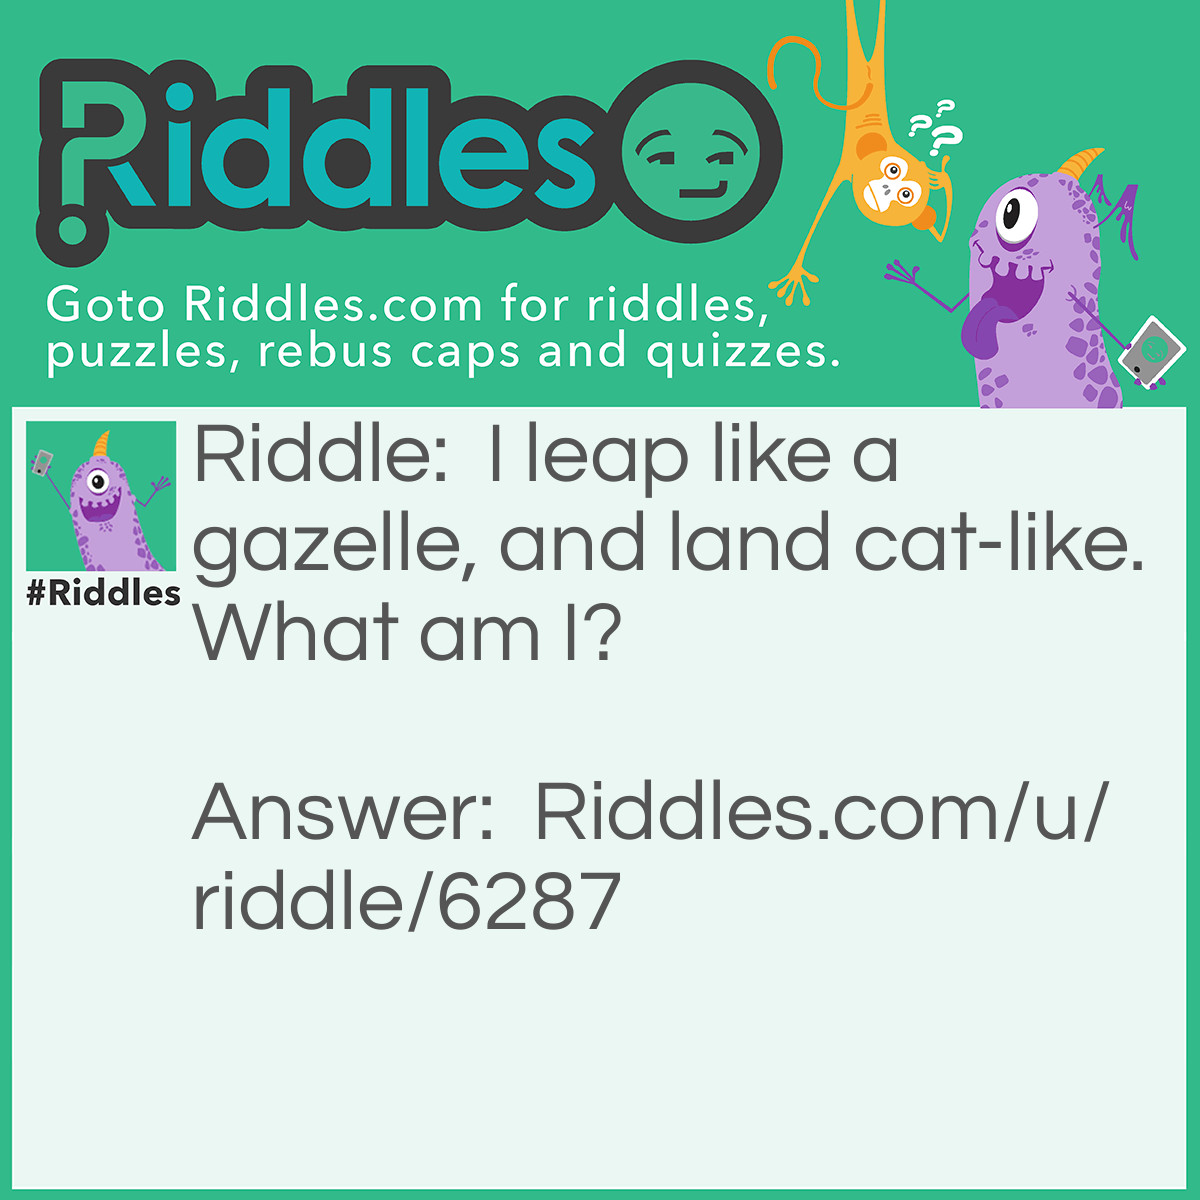 Riddle: I leap like a gazelle, and land cat-like. What am I? Answer: Dirt-bike.